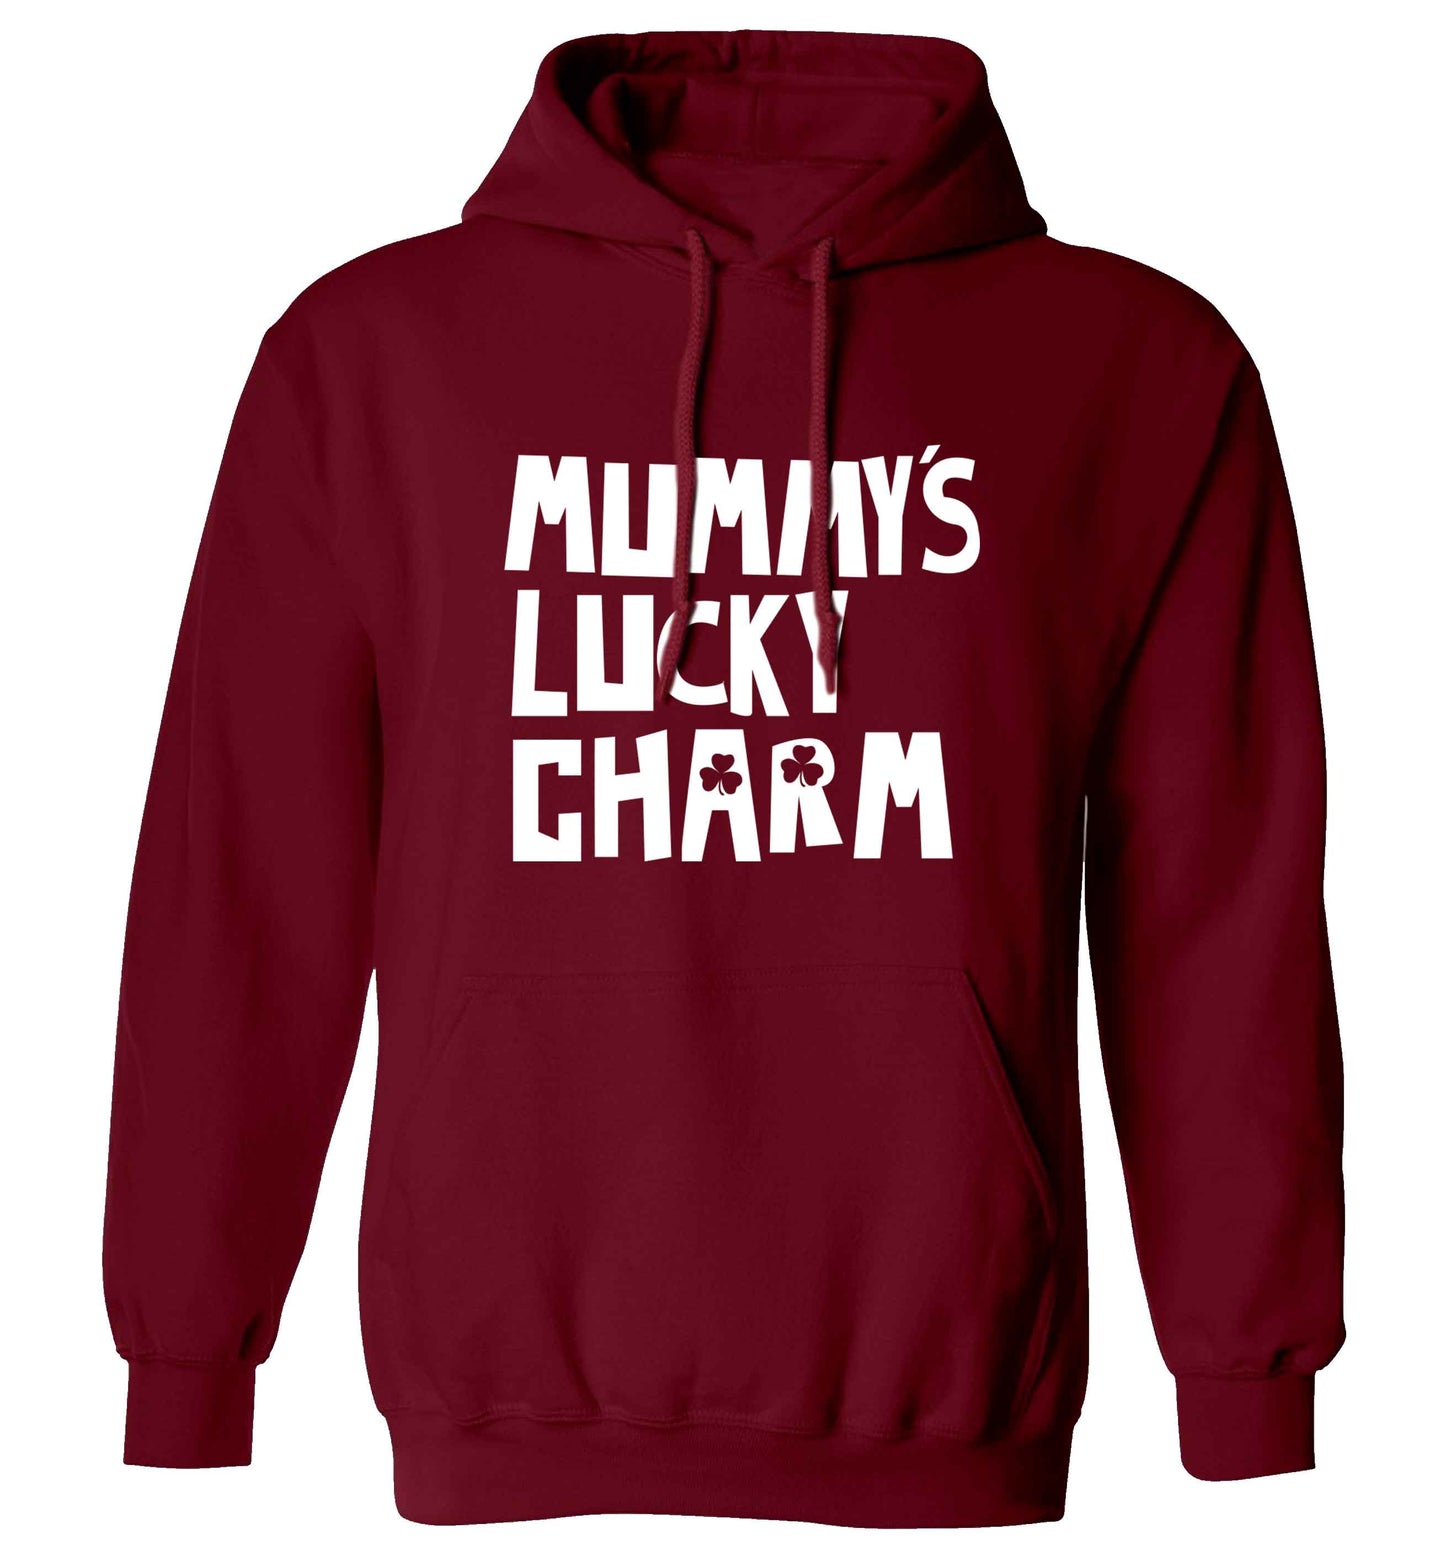 Mummy's lucky charm adults unisex maroon hoodie 2XL